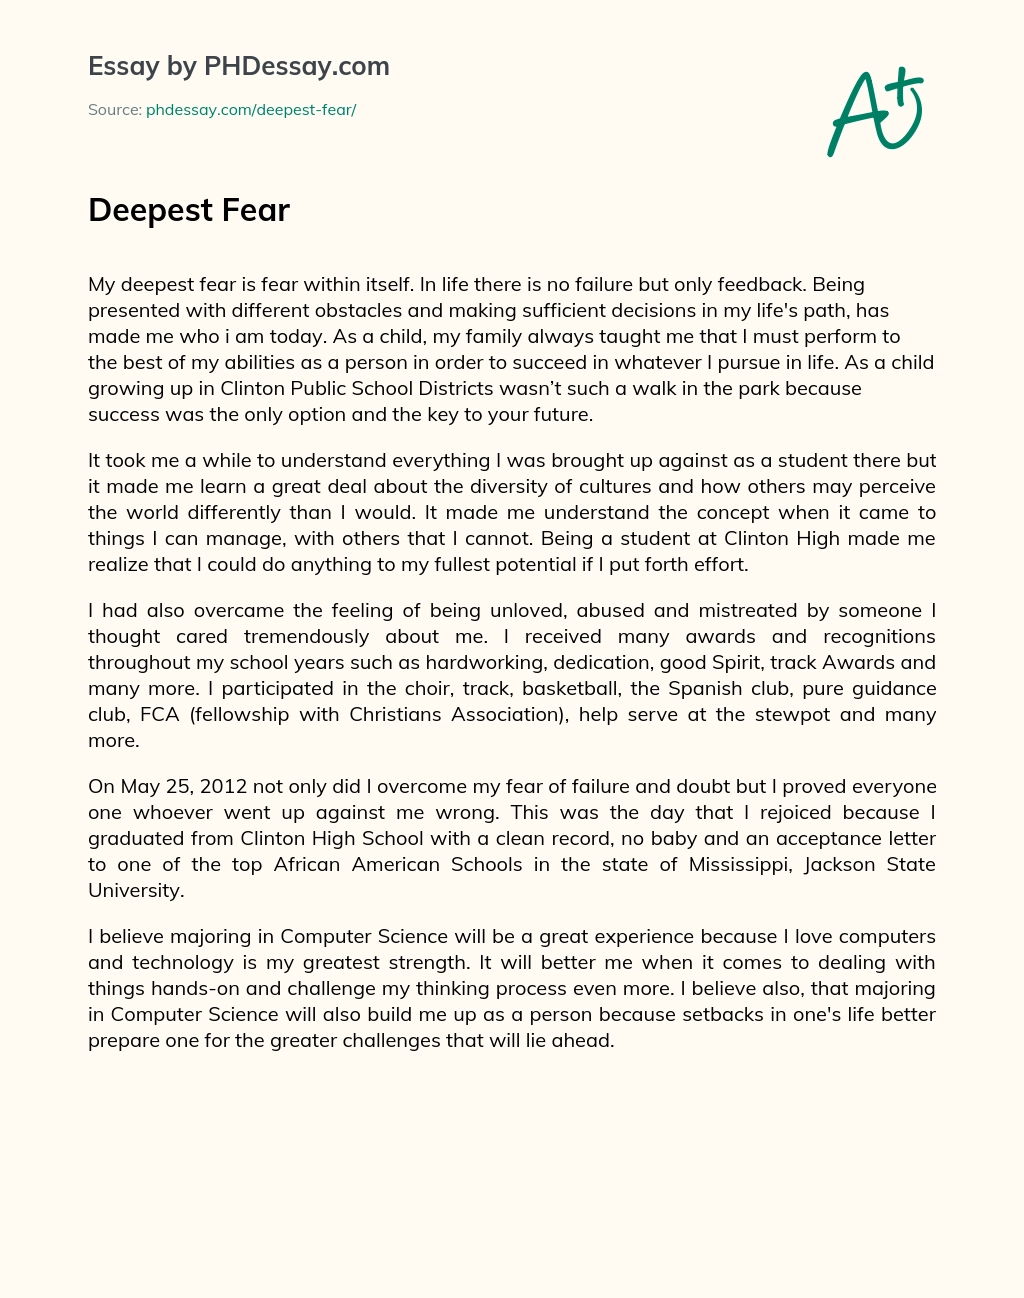 Deepest Fear essay